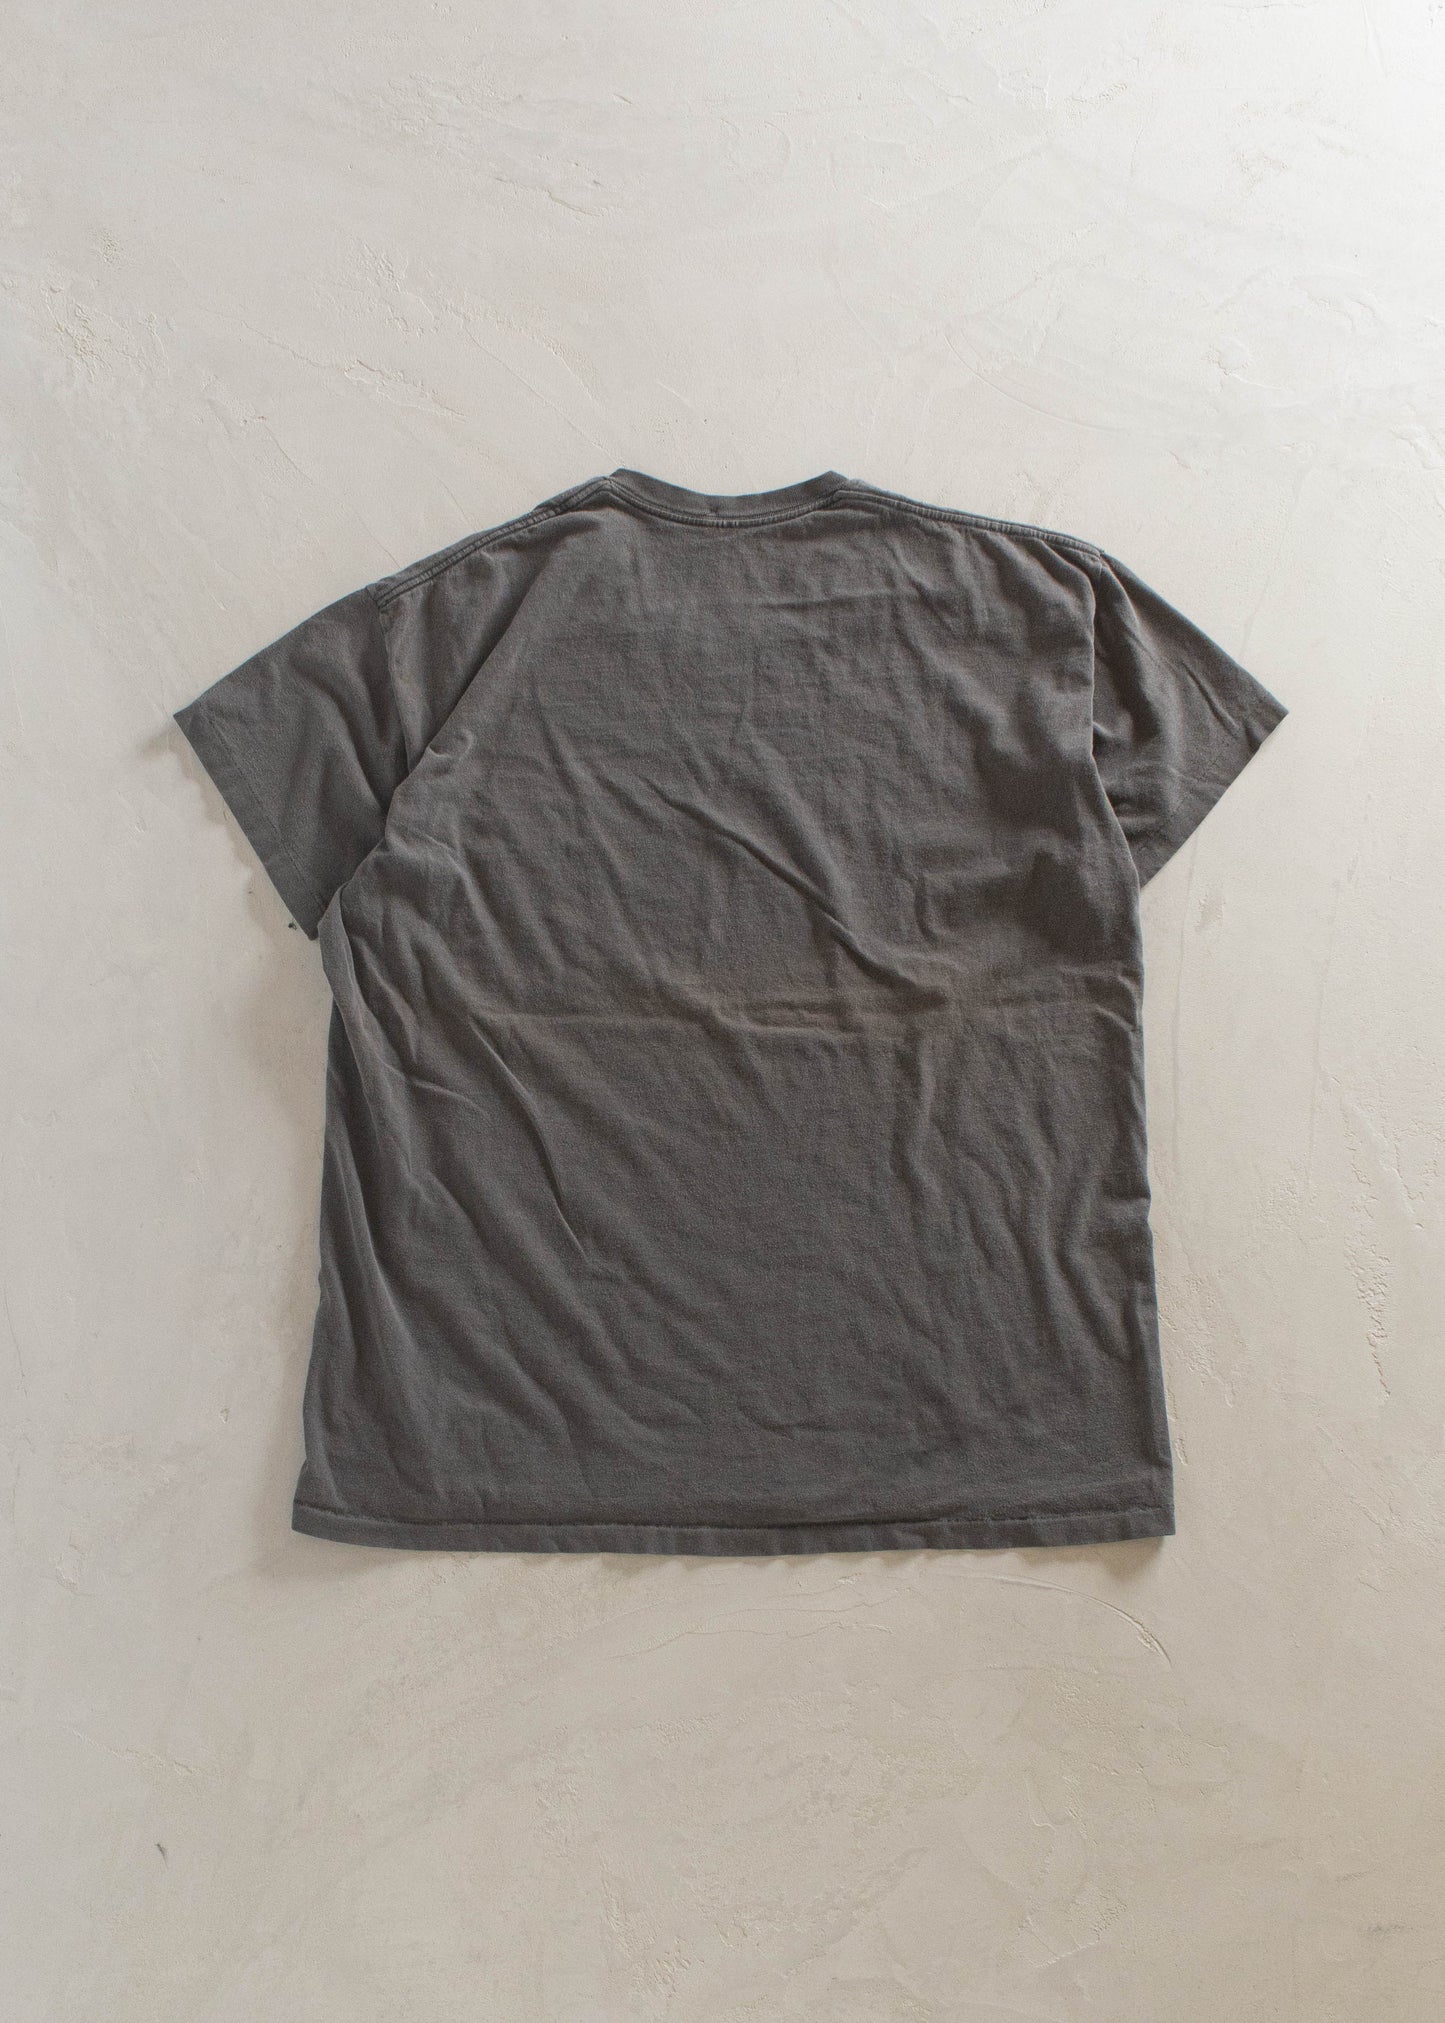 1980s Selvedge Pocket T-Shirt Size L/XL